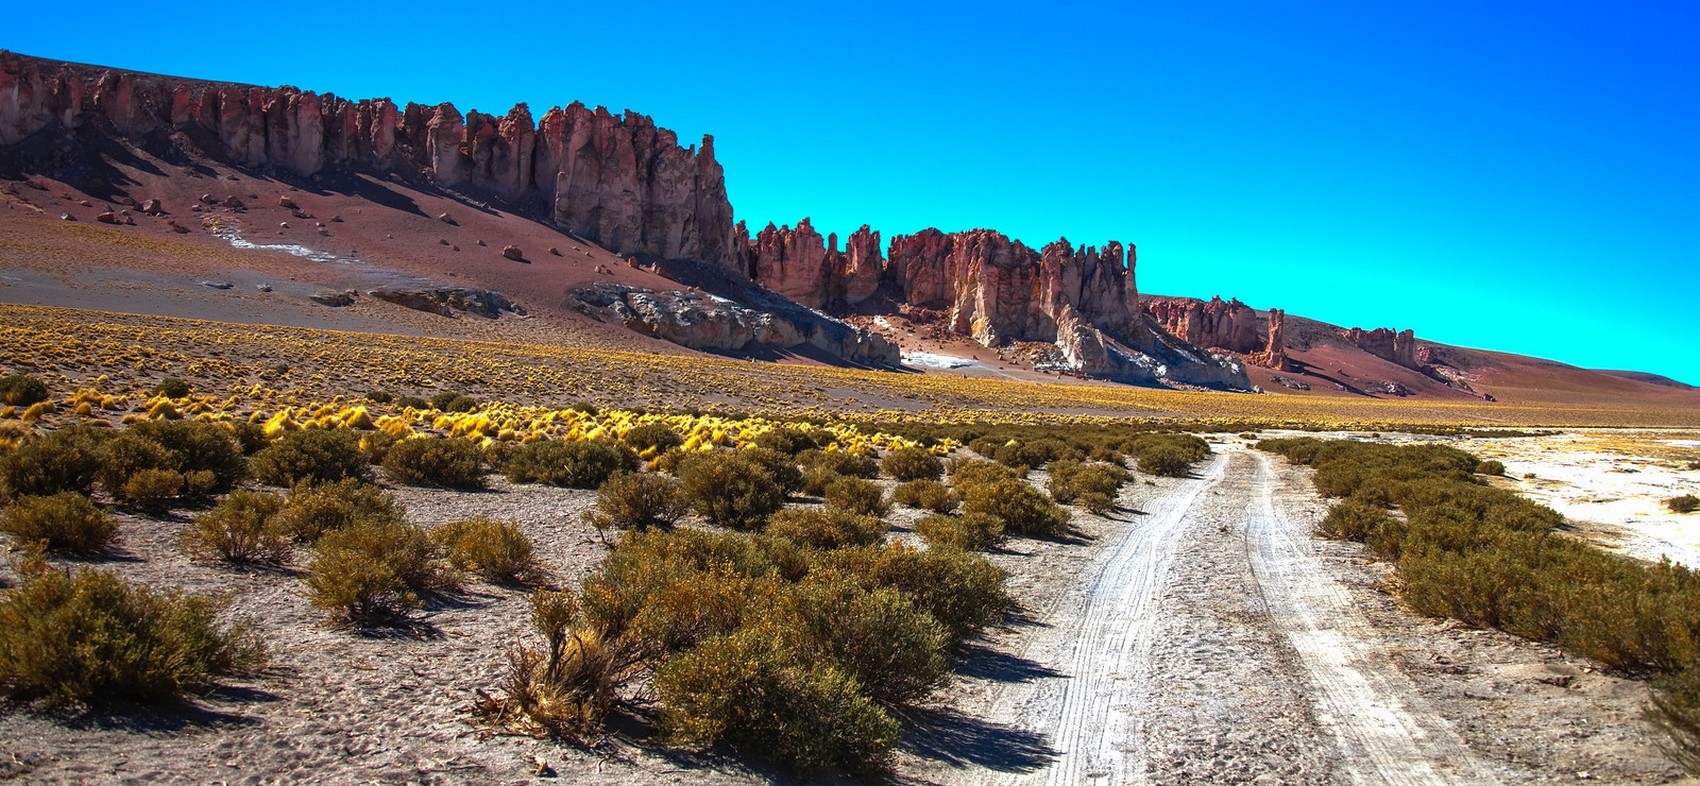 Nature Landscape Atacama Desert Shrubs Panoramas Chile Dirt Road Rock Shrubbery Desert 1700x786